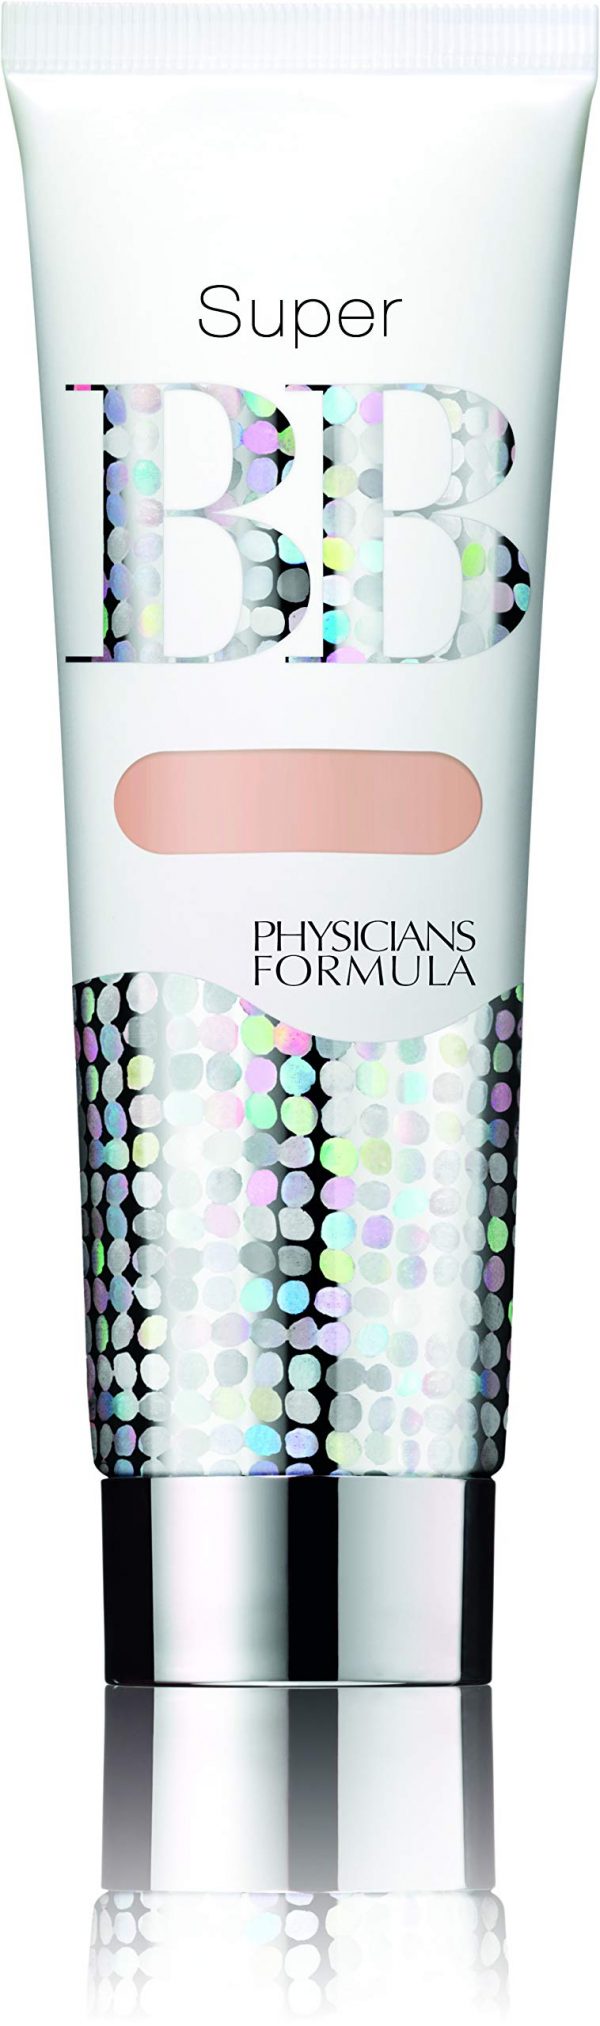 Physicians Formula Super BB All-in-1 Beauty Balm Cream